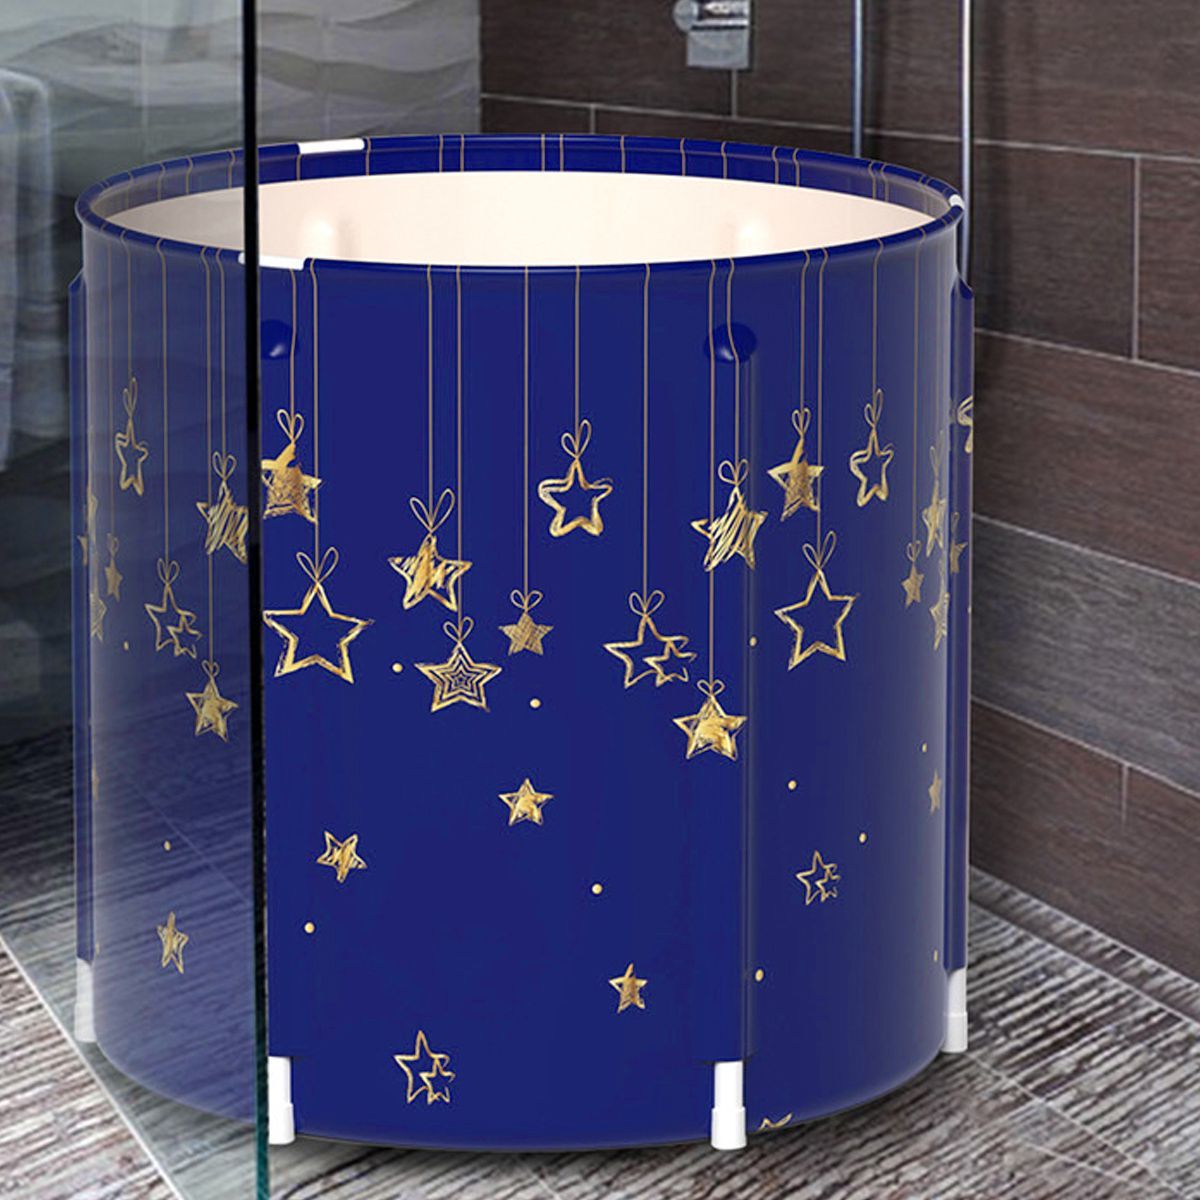 70x70cm-Starry-Sky-Bathtub-Water-Tub-Folding-Indoor-Outdoor-Portable-Spa-Bath-Bucket-1756231